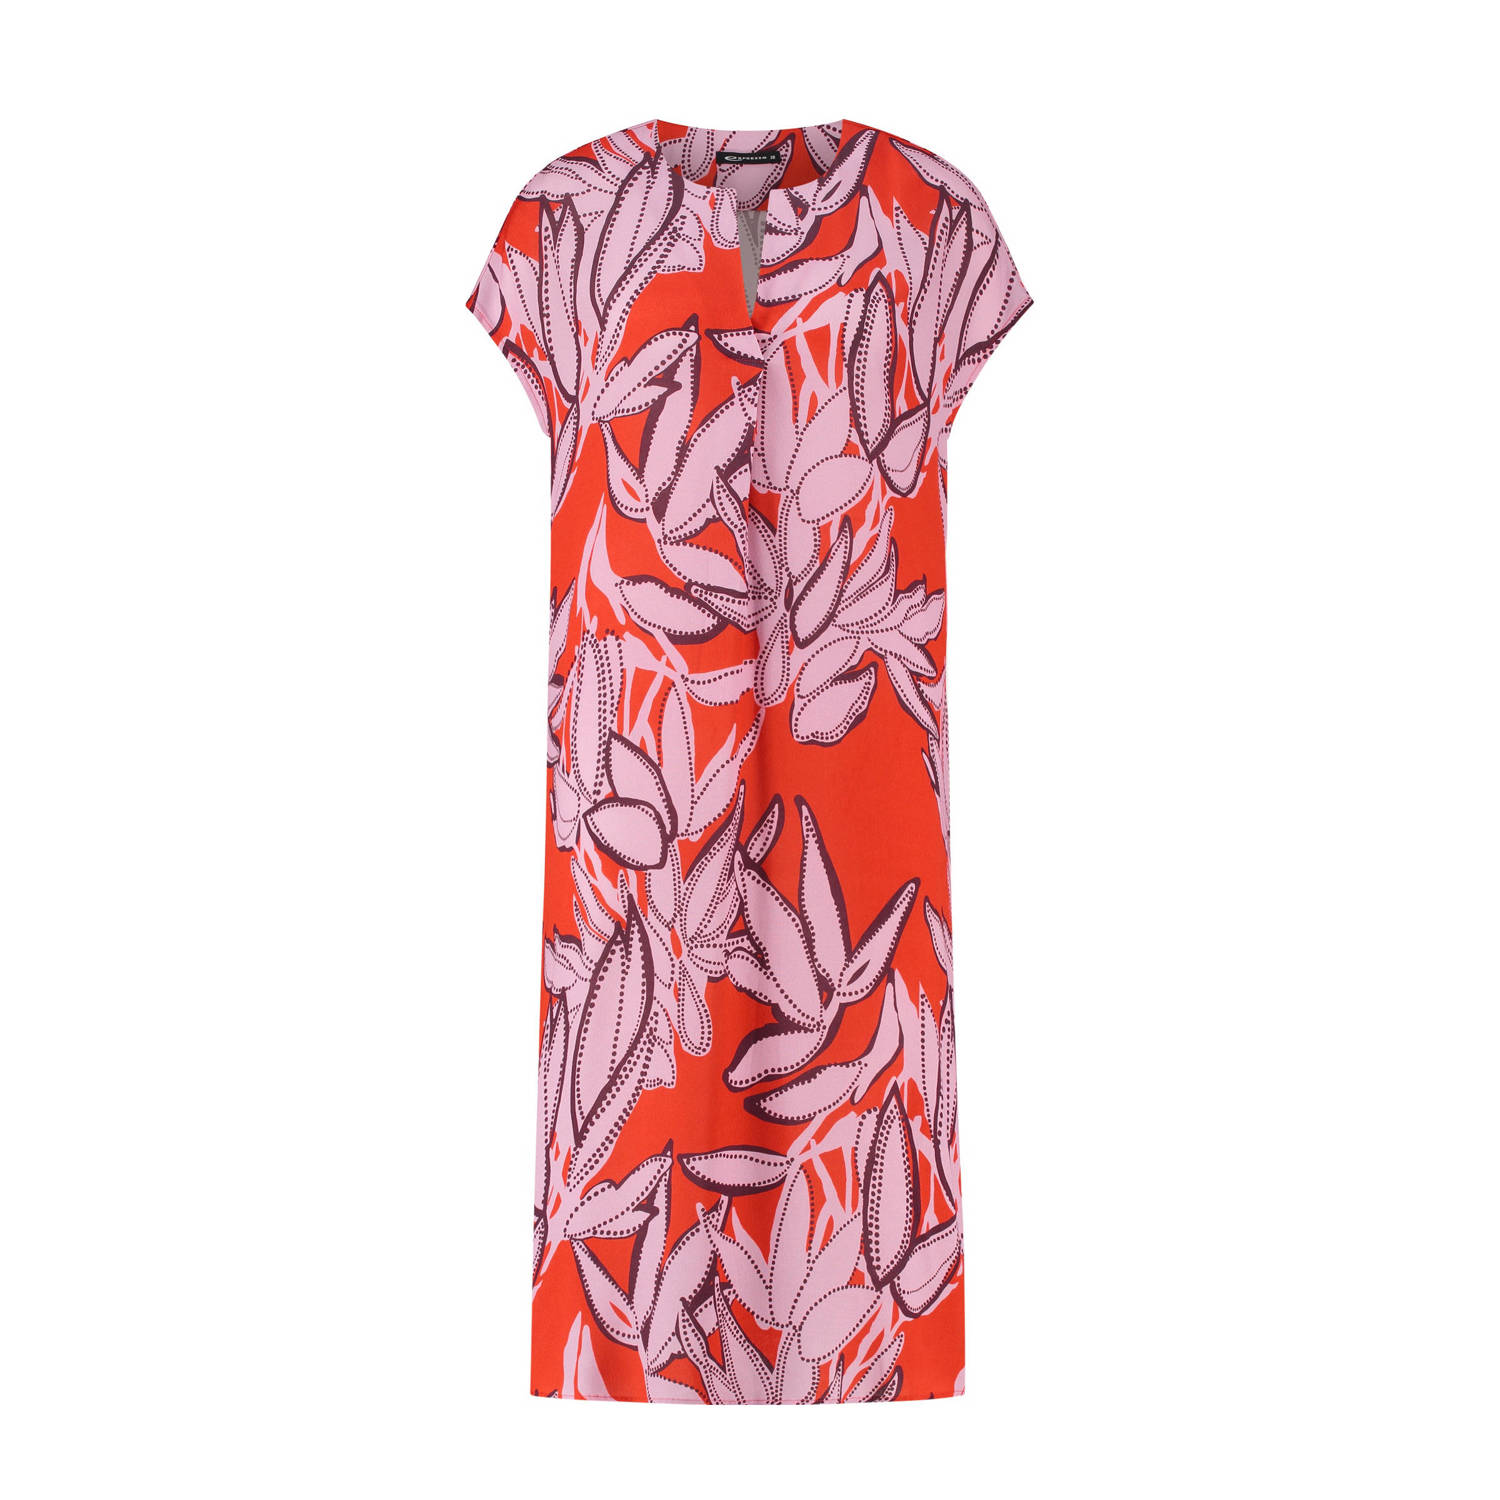 Expresso jurk met bladprint rood roze